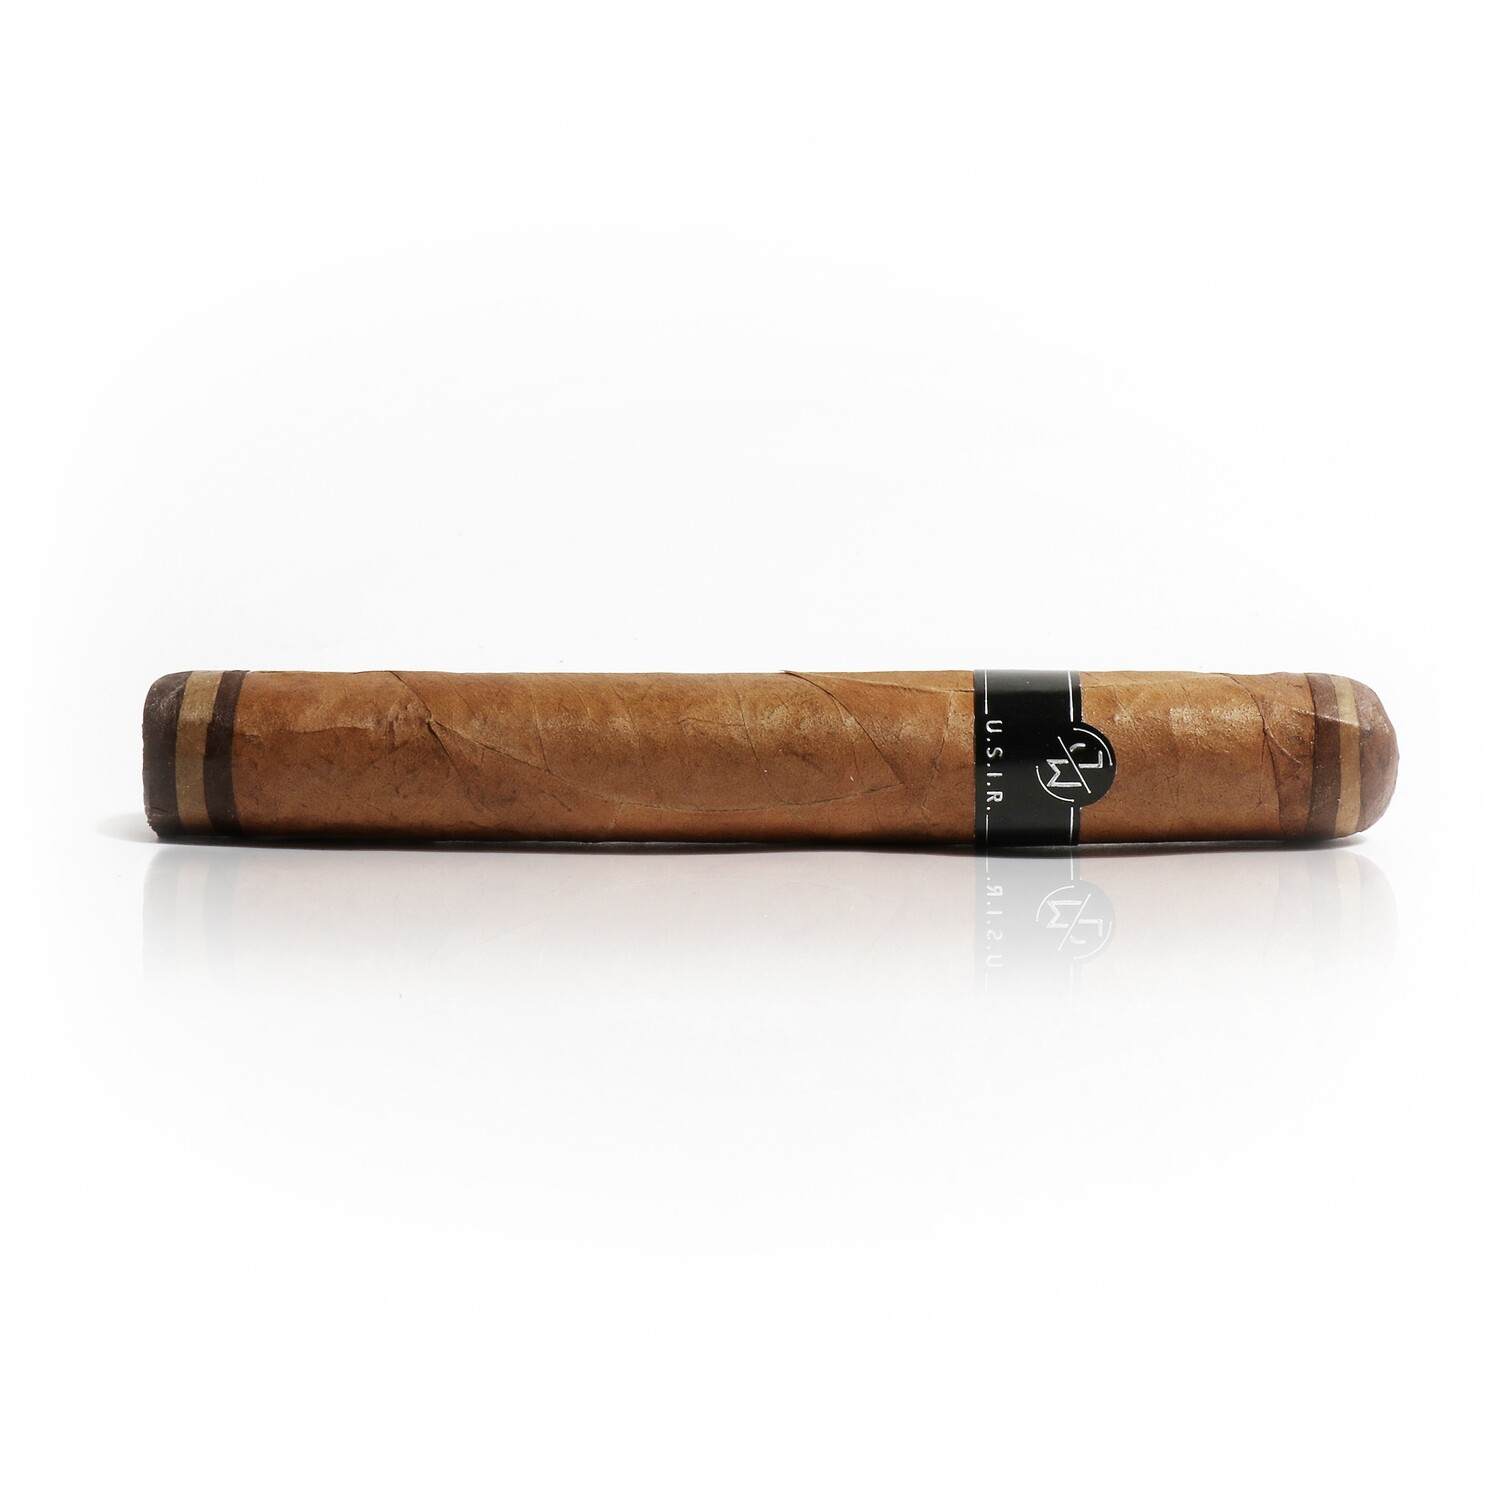 Jake Wyatt U.S.I.R. Robusto 5 x 50 Single Cigar